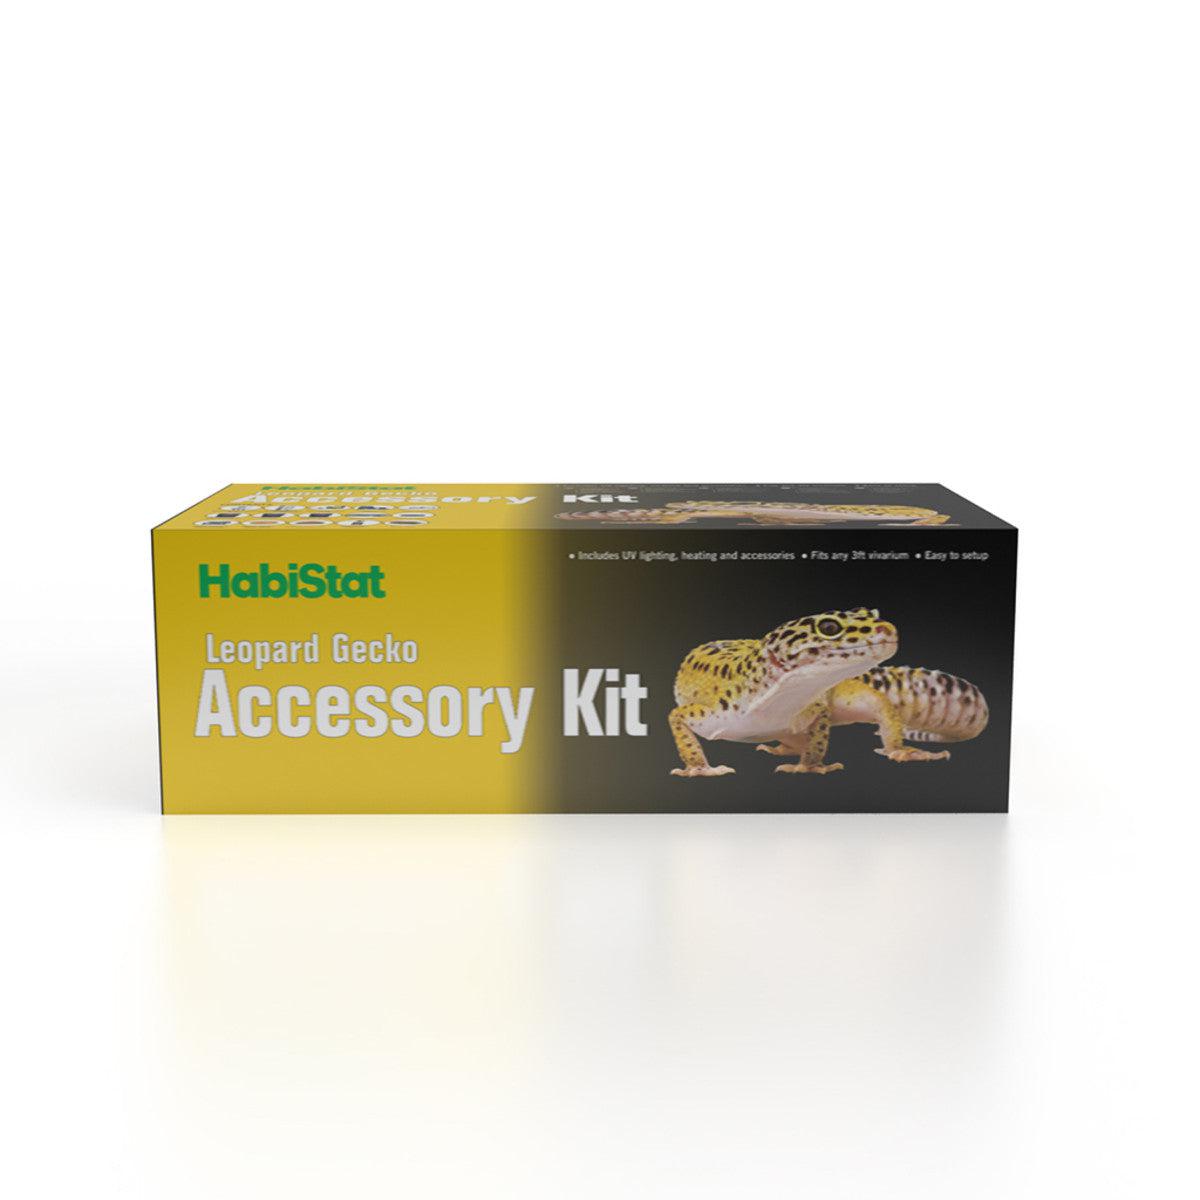 HabiStat Leopard Gecko Accessory Kit